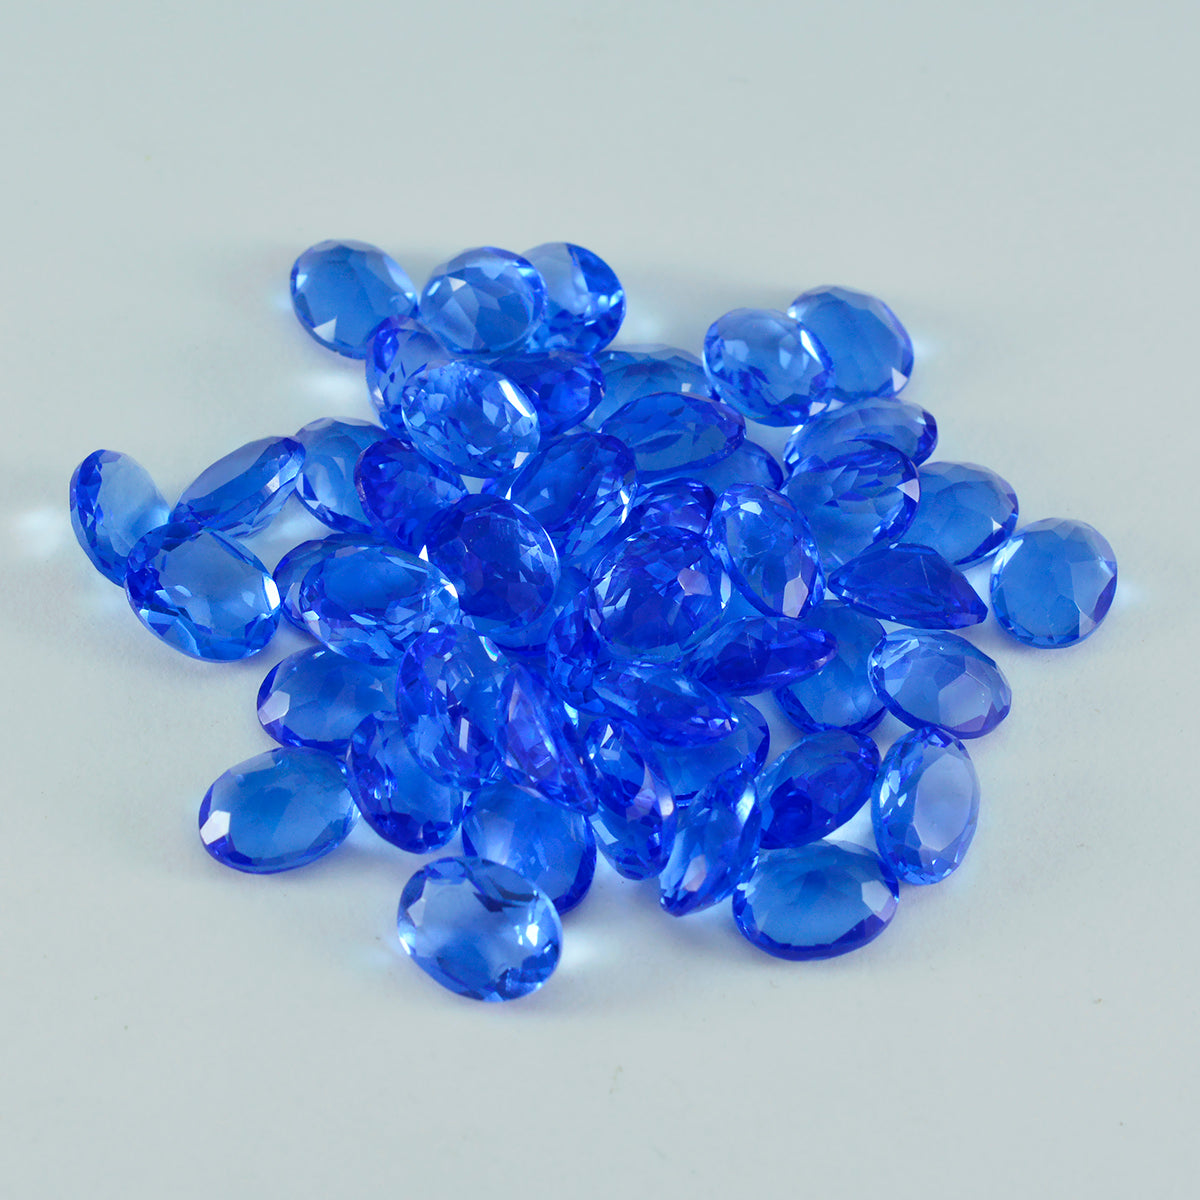 riyogems 1 st blå safir cz facetterad 4x6 mm oval form aaa kvalitets lös sten